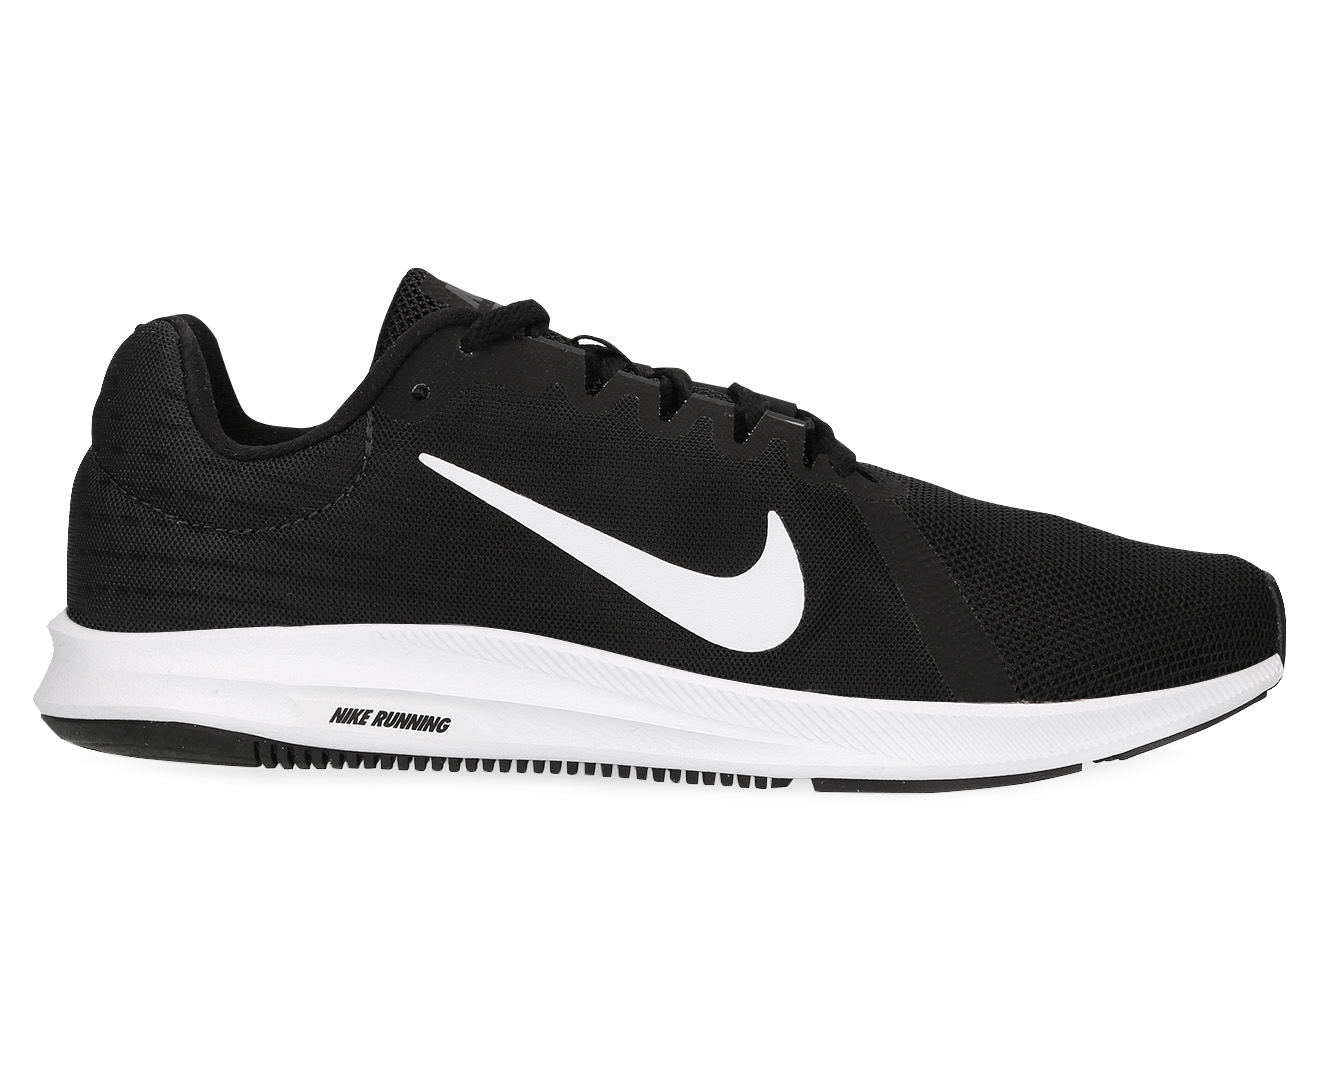 Nike Women's Downshifter 8 Shoe - Black/White/Anthracite | Www.catch.co.nz